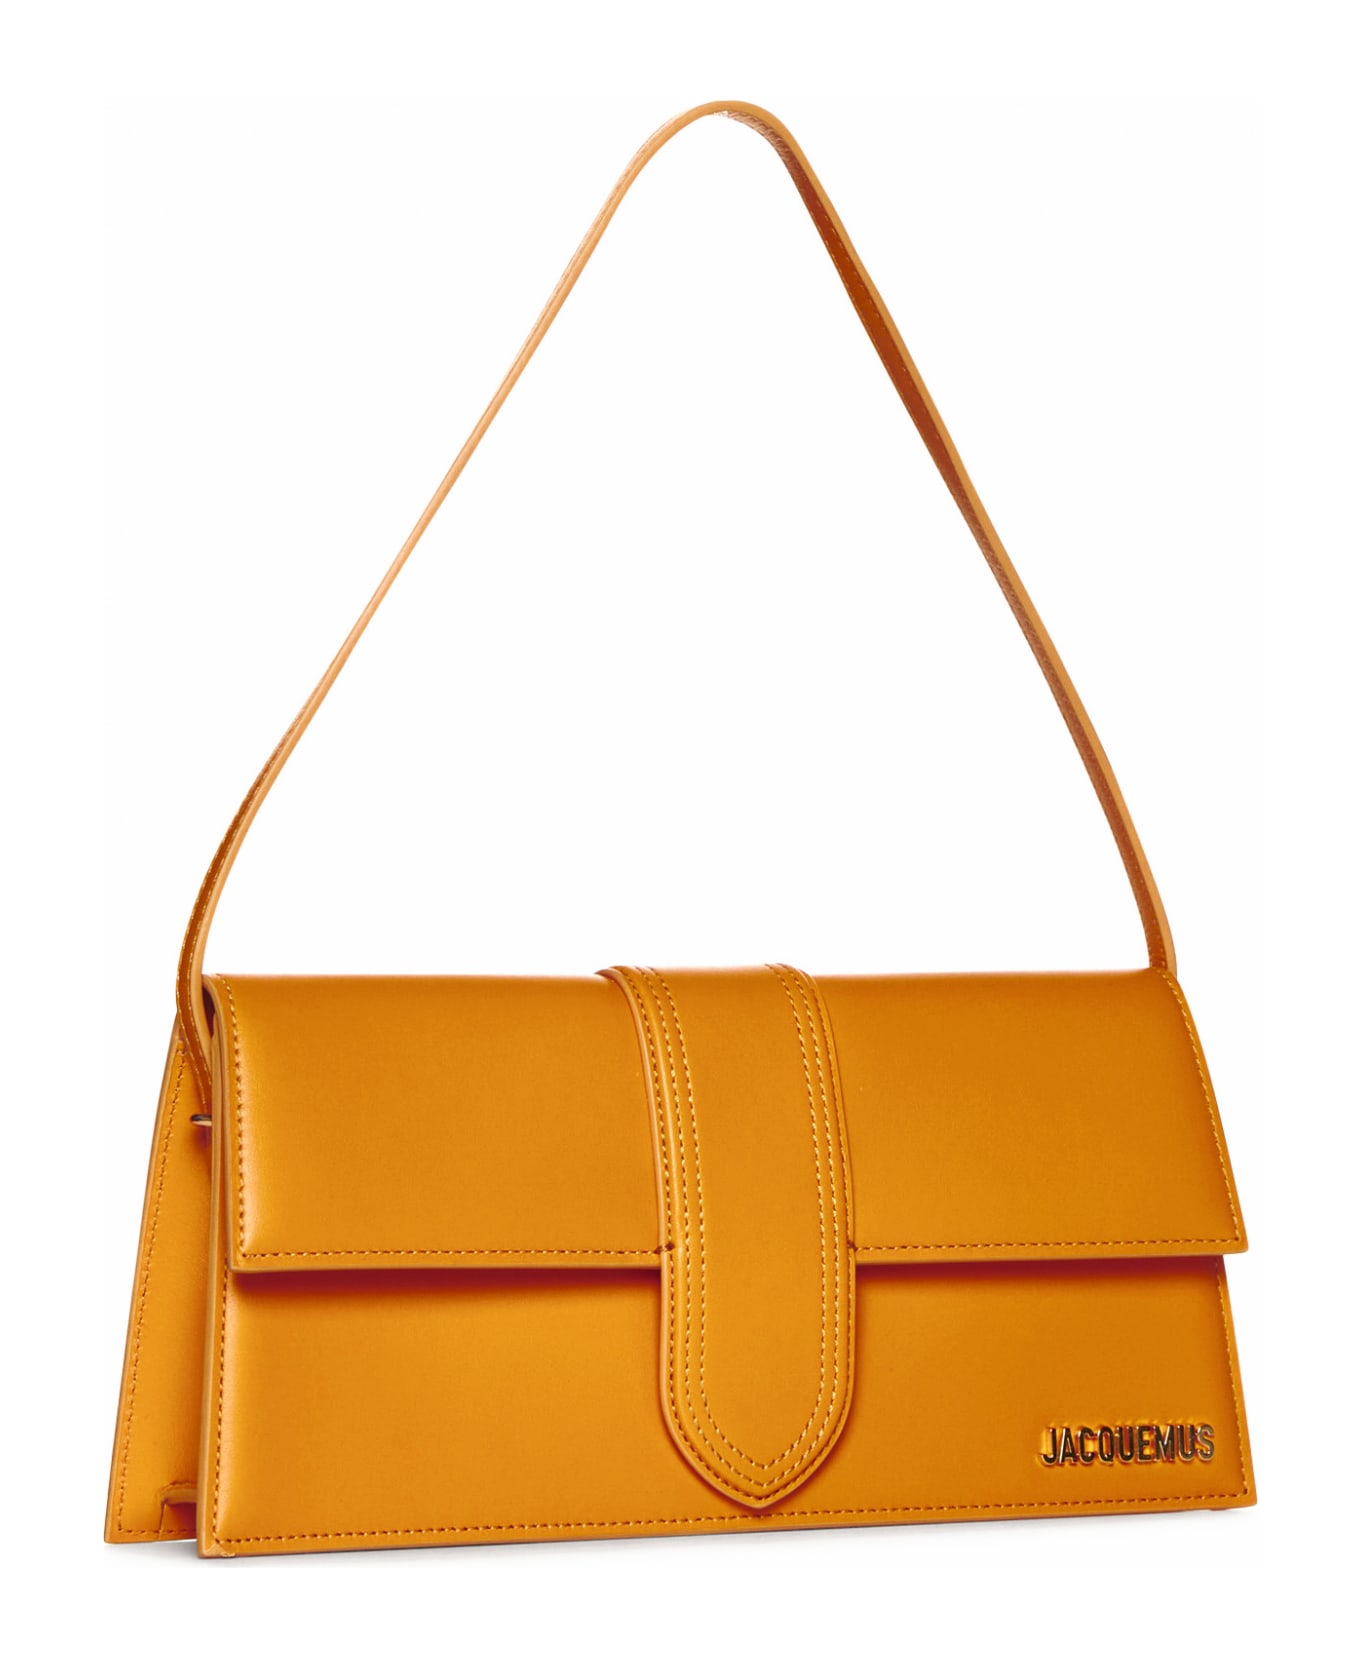 Jacquemus Le Long Baby Bag - Dark orange